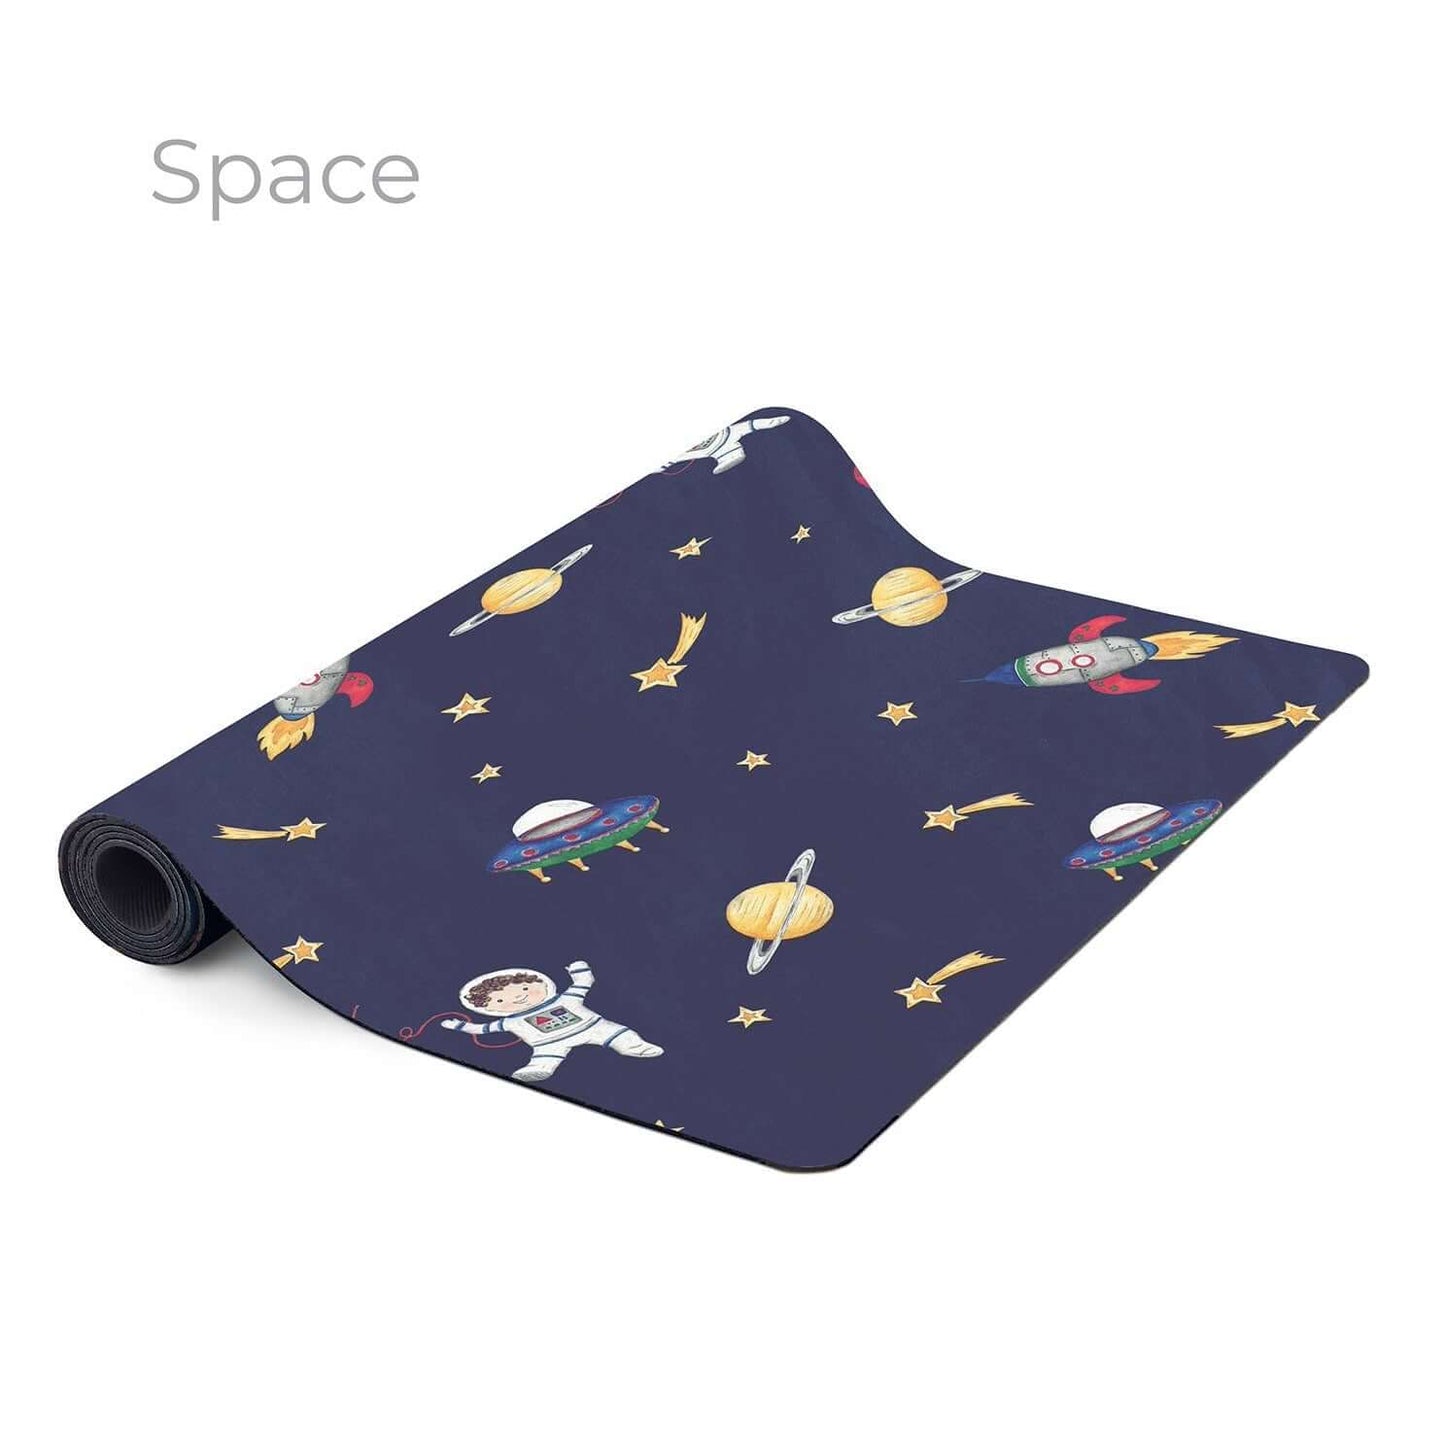 Space Kids Yoga Mat